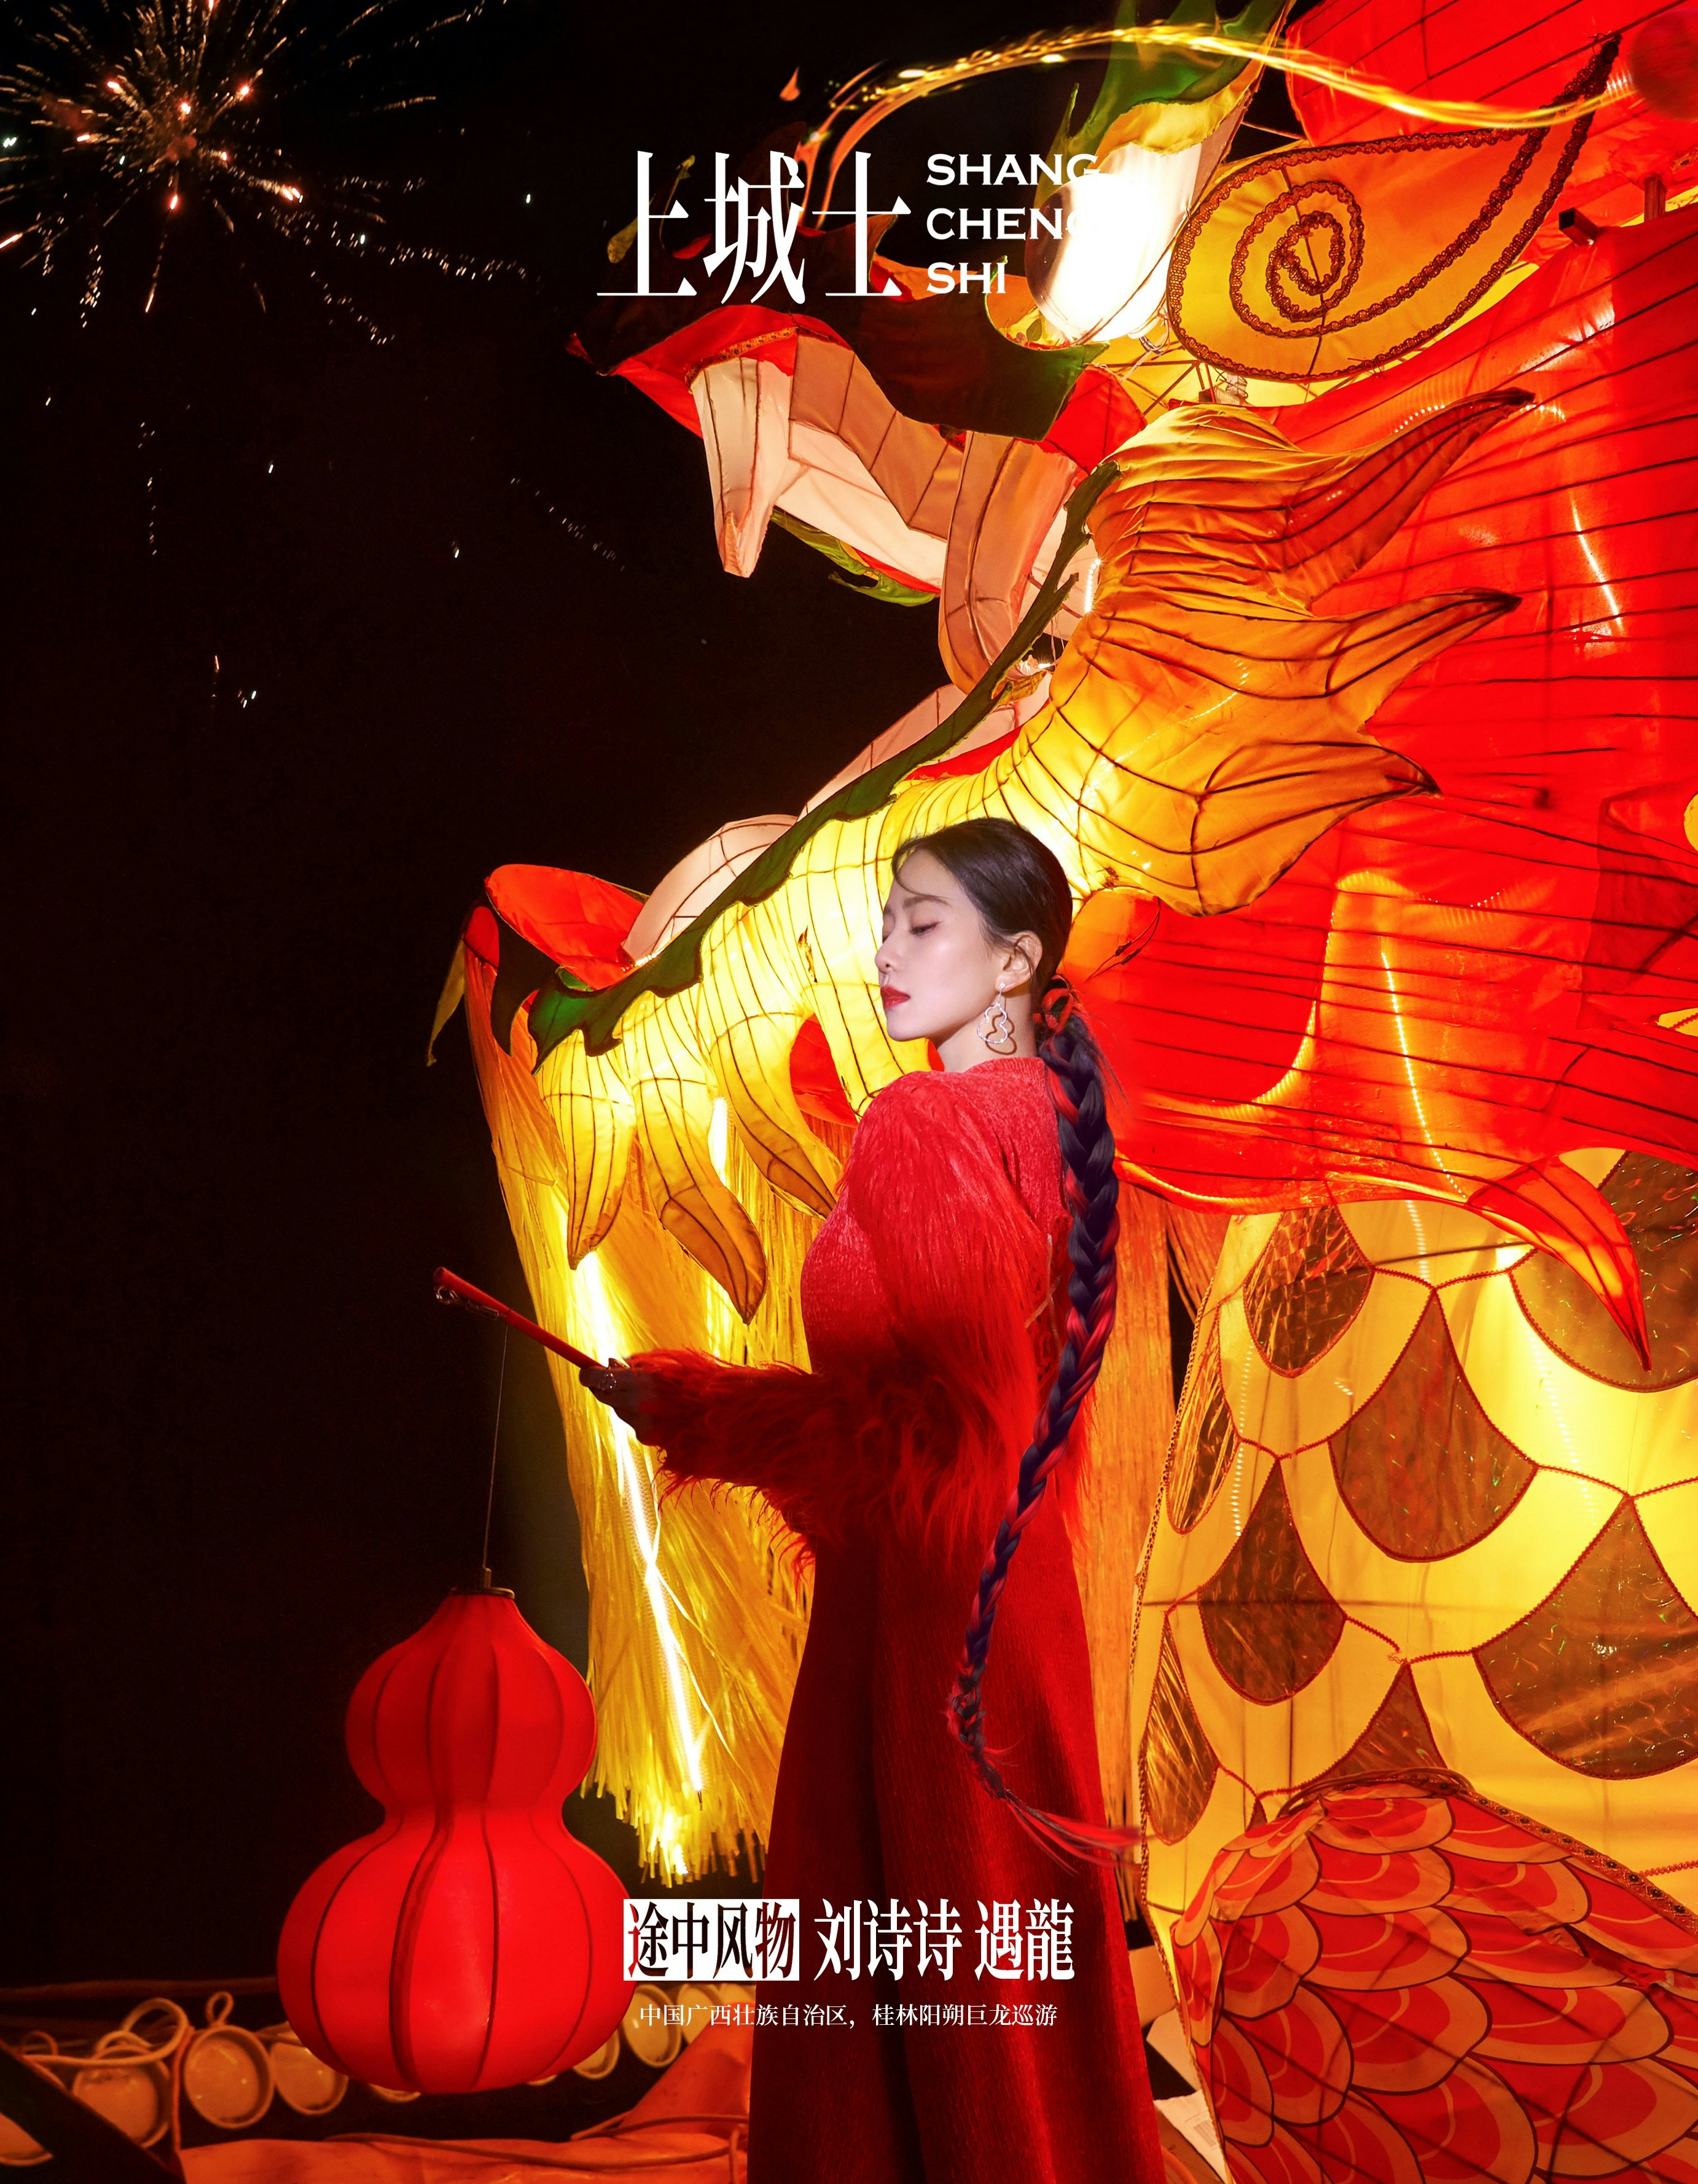 Qeelin's brand global ambassador, Chinese actress Liu Shishi dressed in elegant traditional attire, dons the brand's distinctive Wulu series jewelry. Photo: Shang Cheng Shi